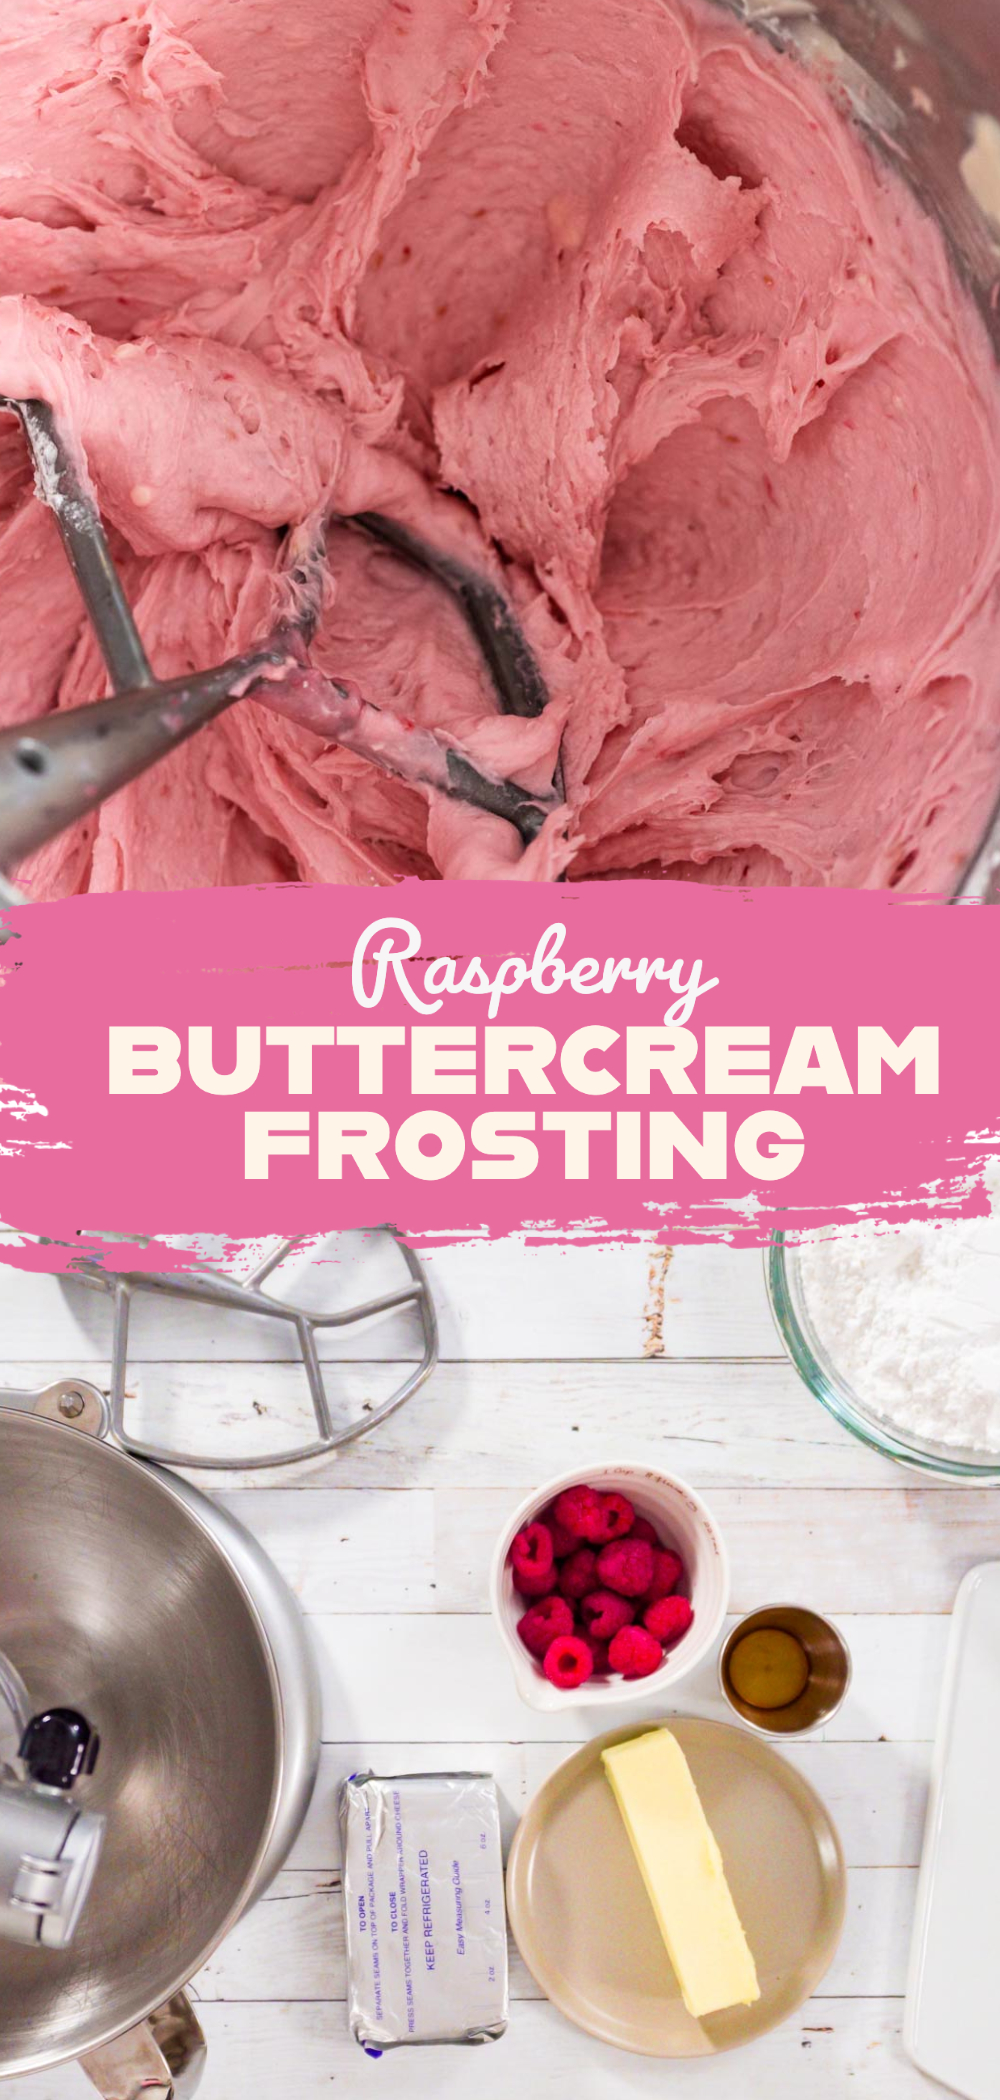 Raspberry buttercream frosting